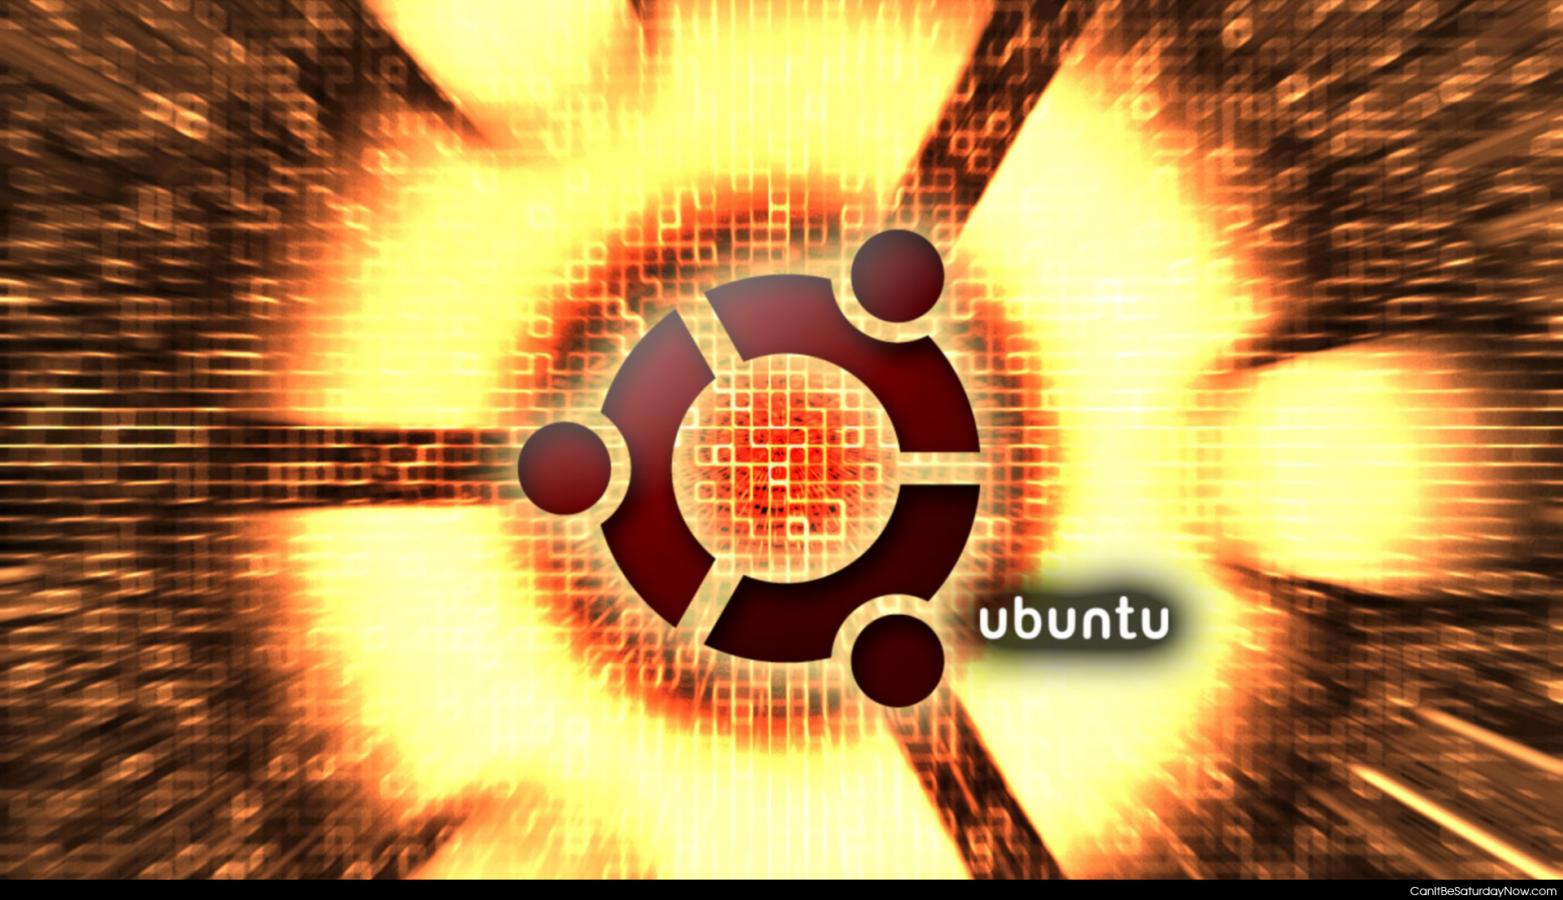 Ubuntu blocks - ubuntu blocks background